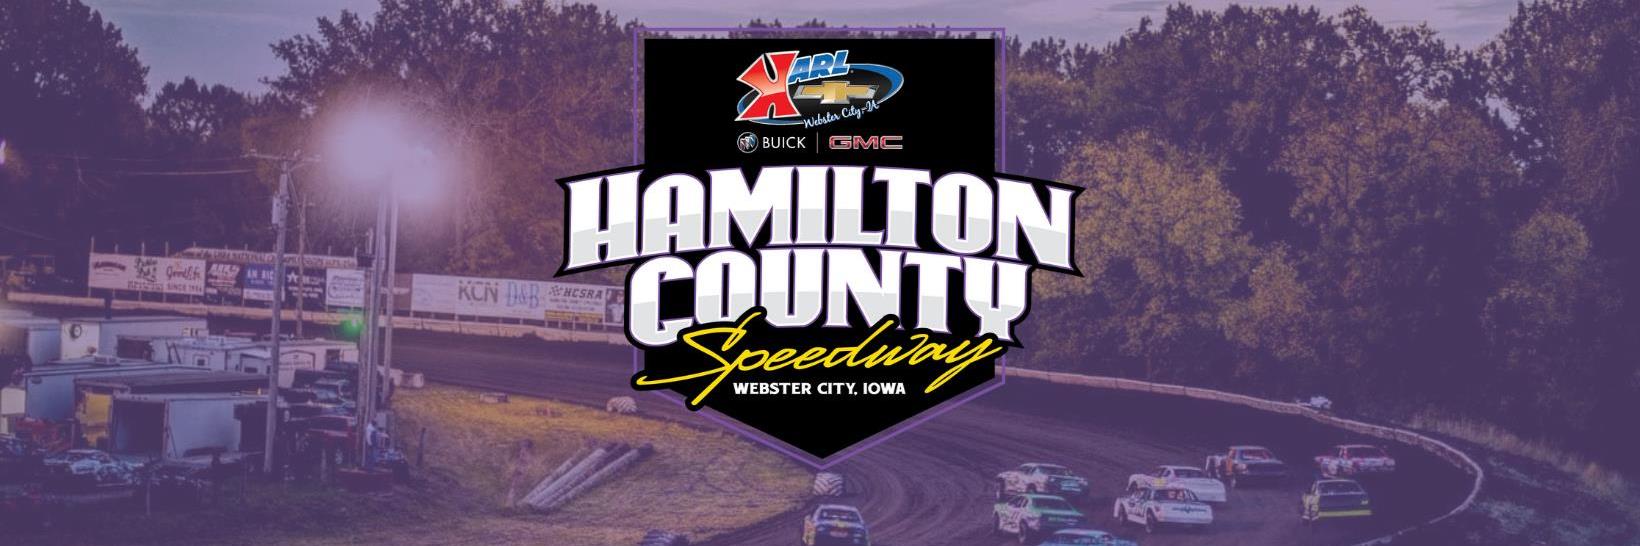 8/13/2022 - Hamilton County Speedway